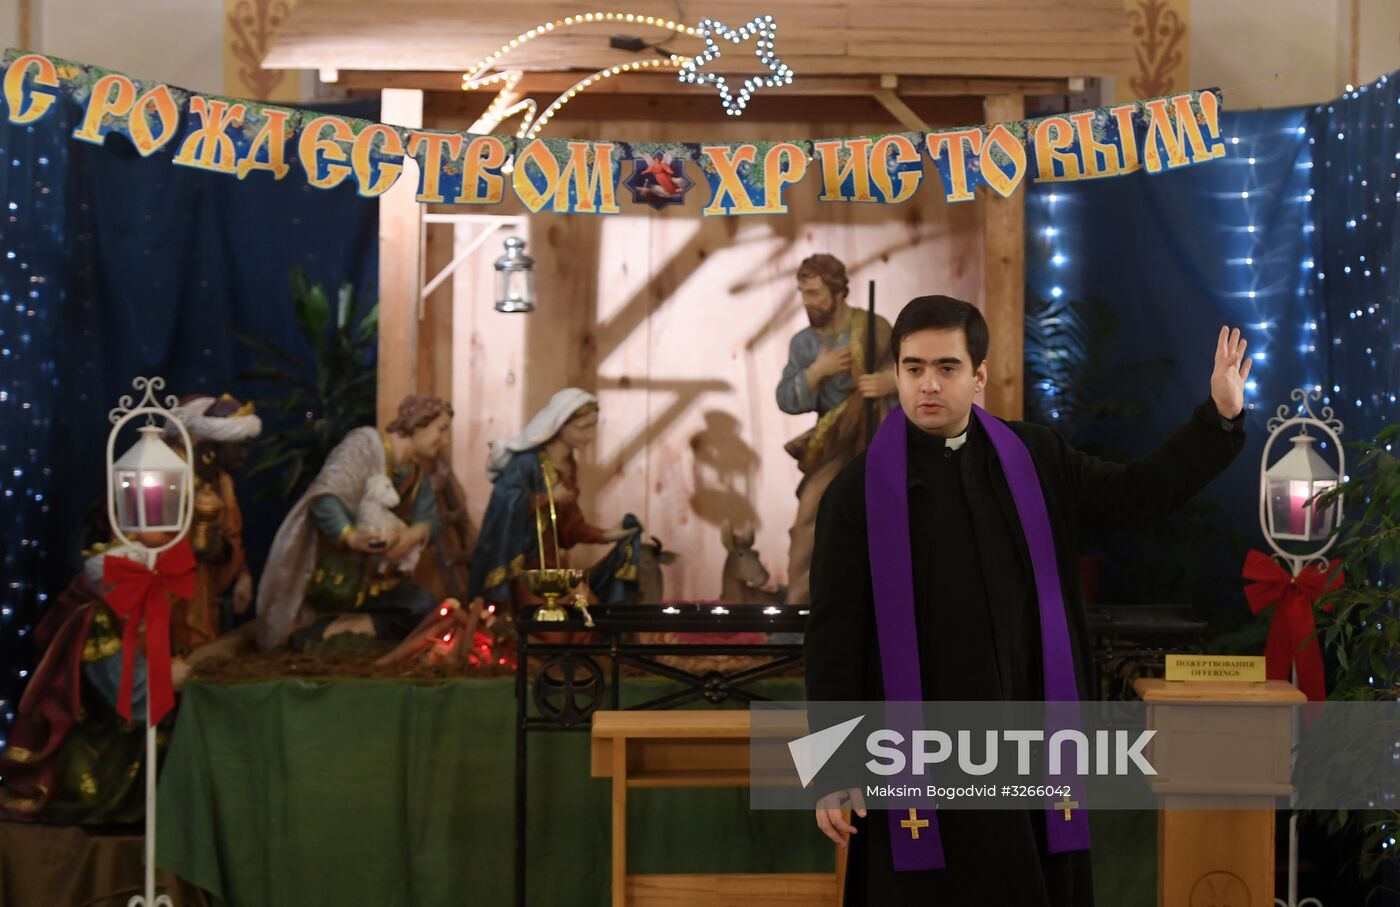 Catholic Christmas celebrations in Russia